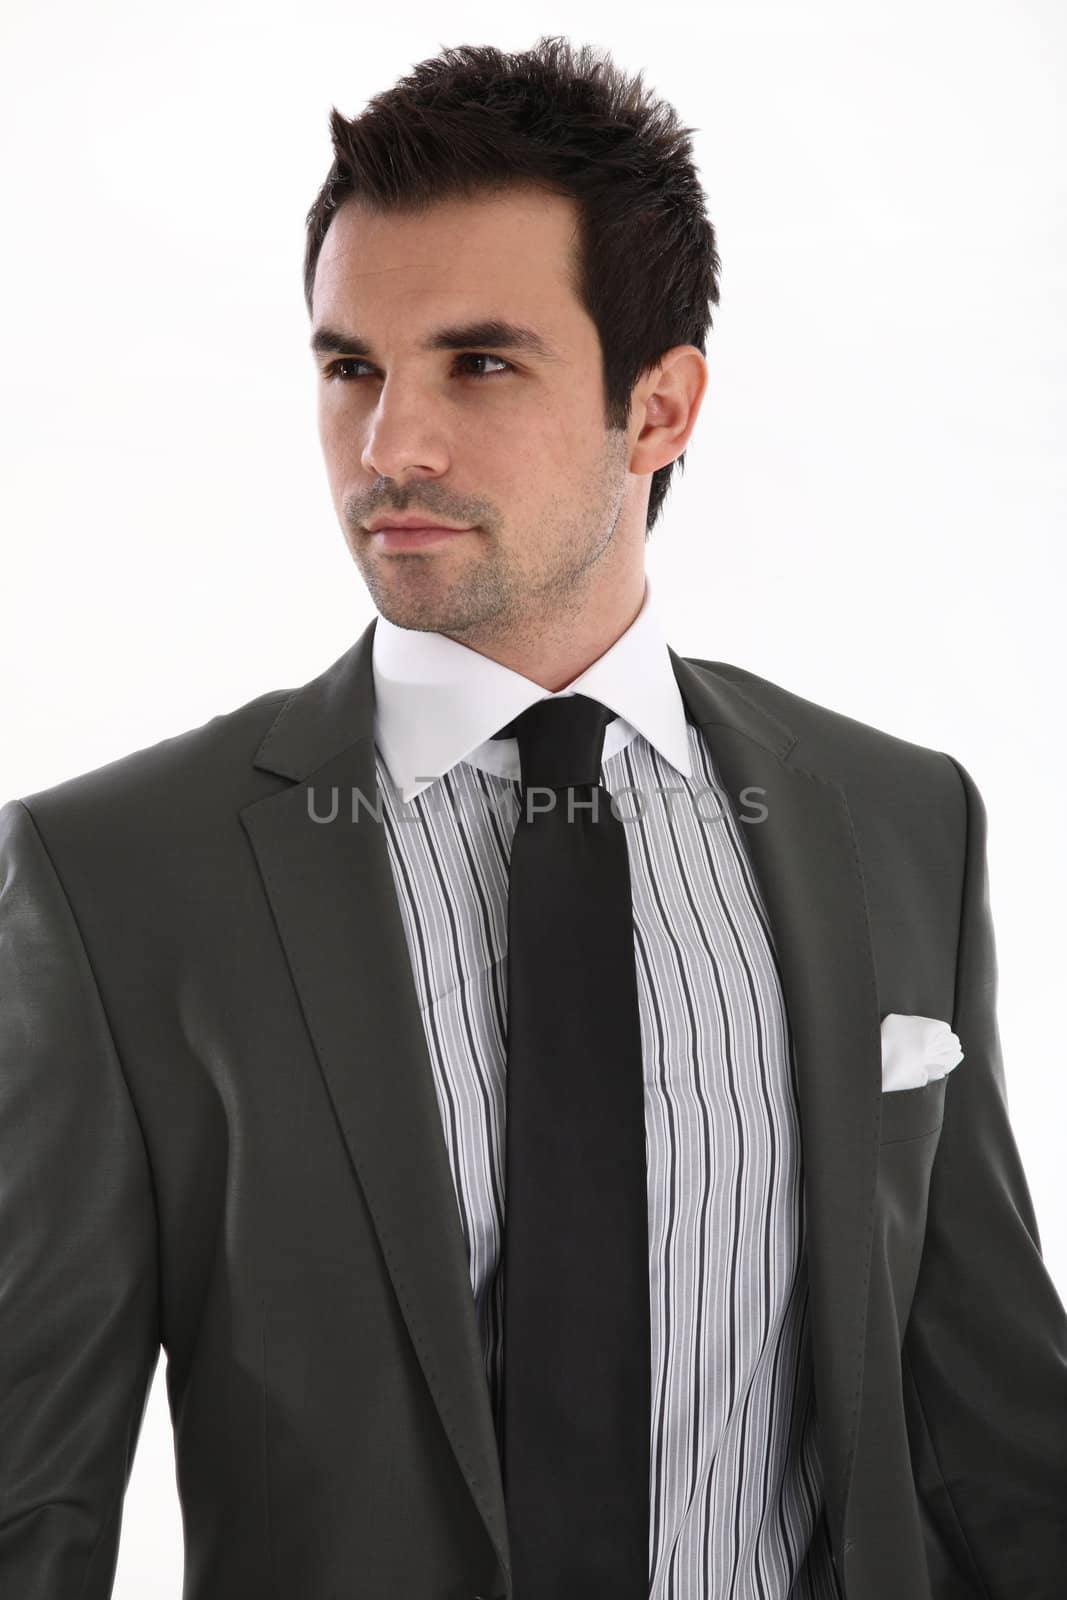 Elegant handsome man in suit by shamtor